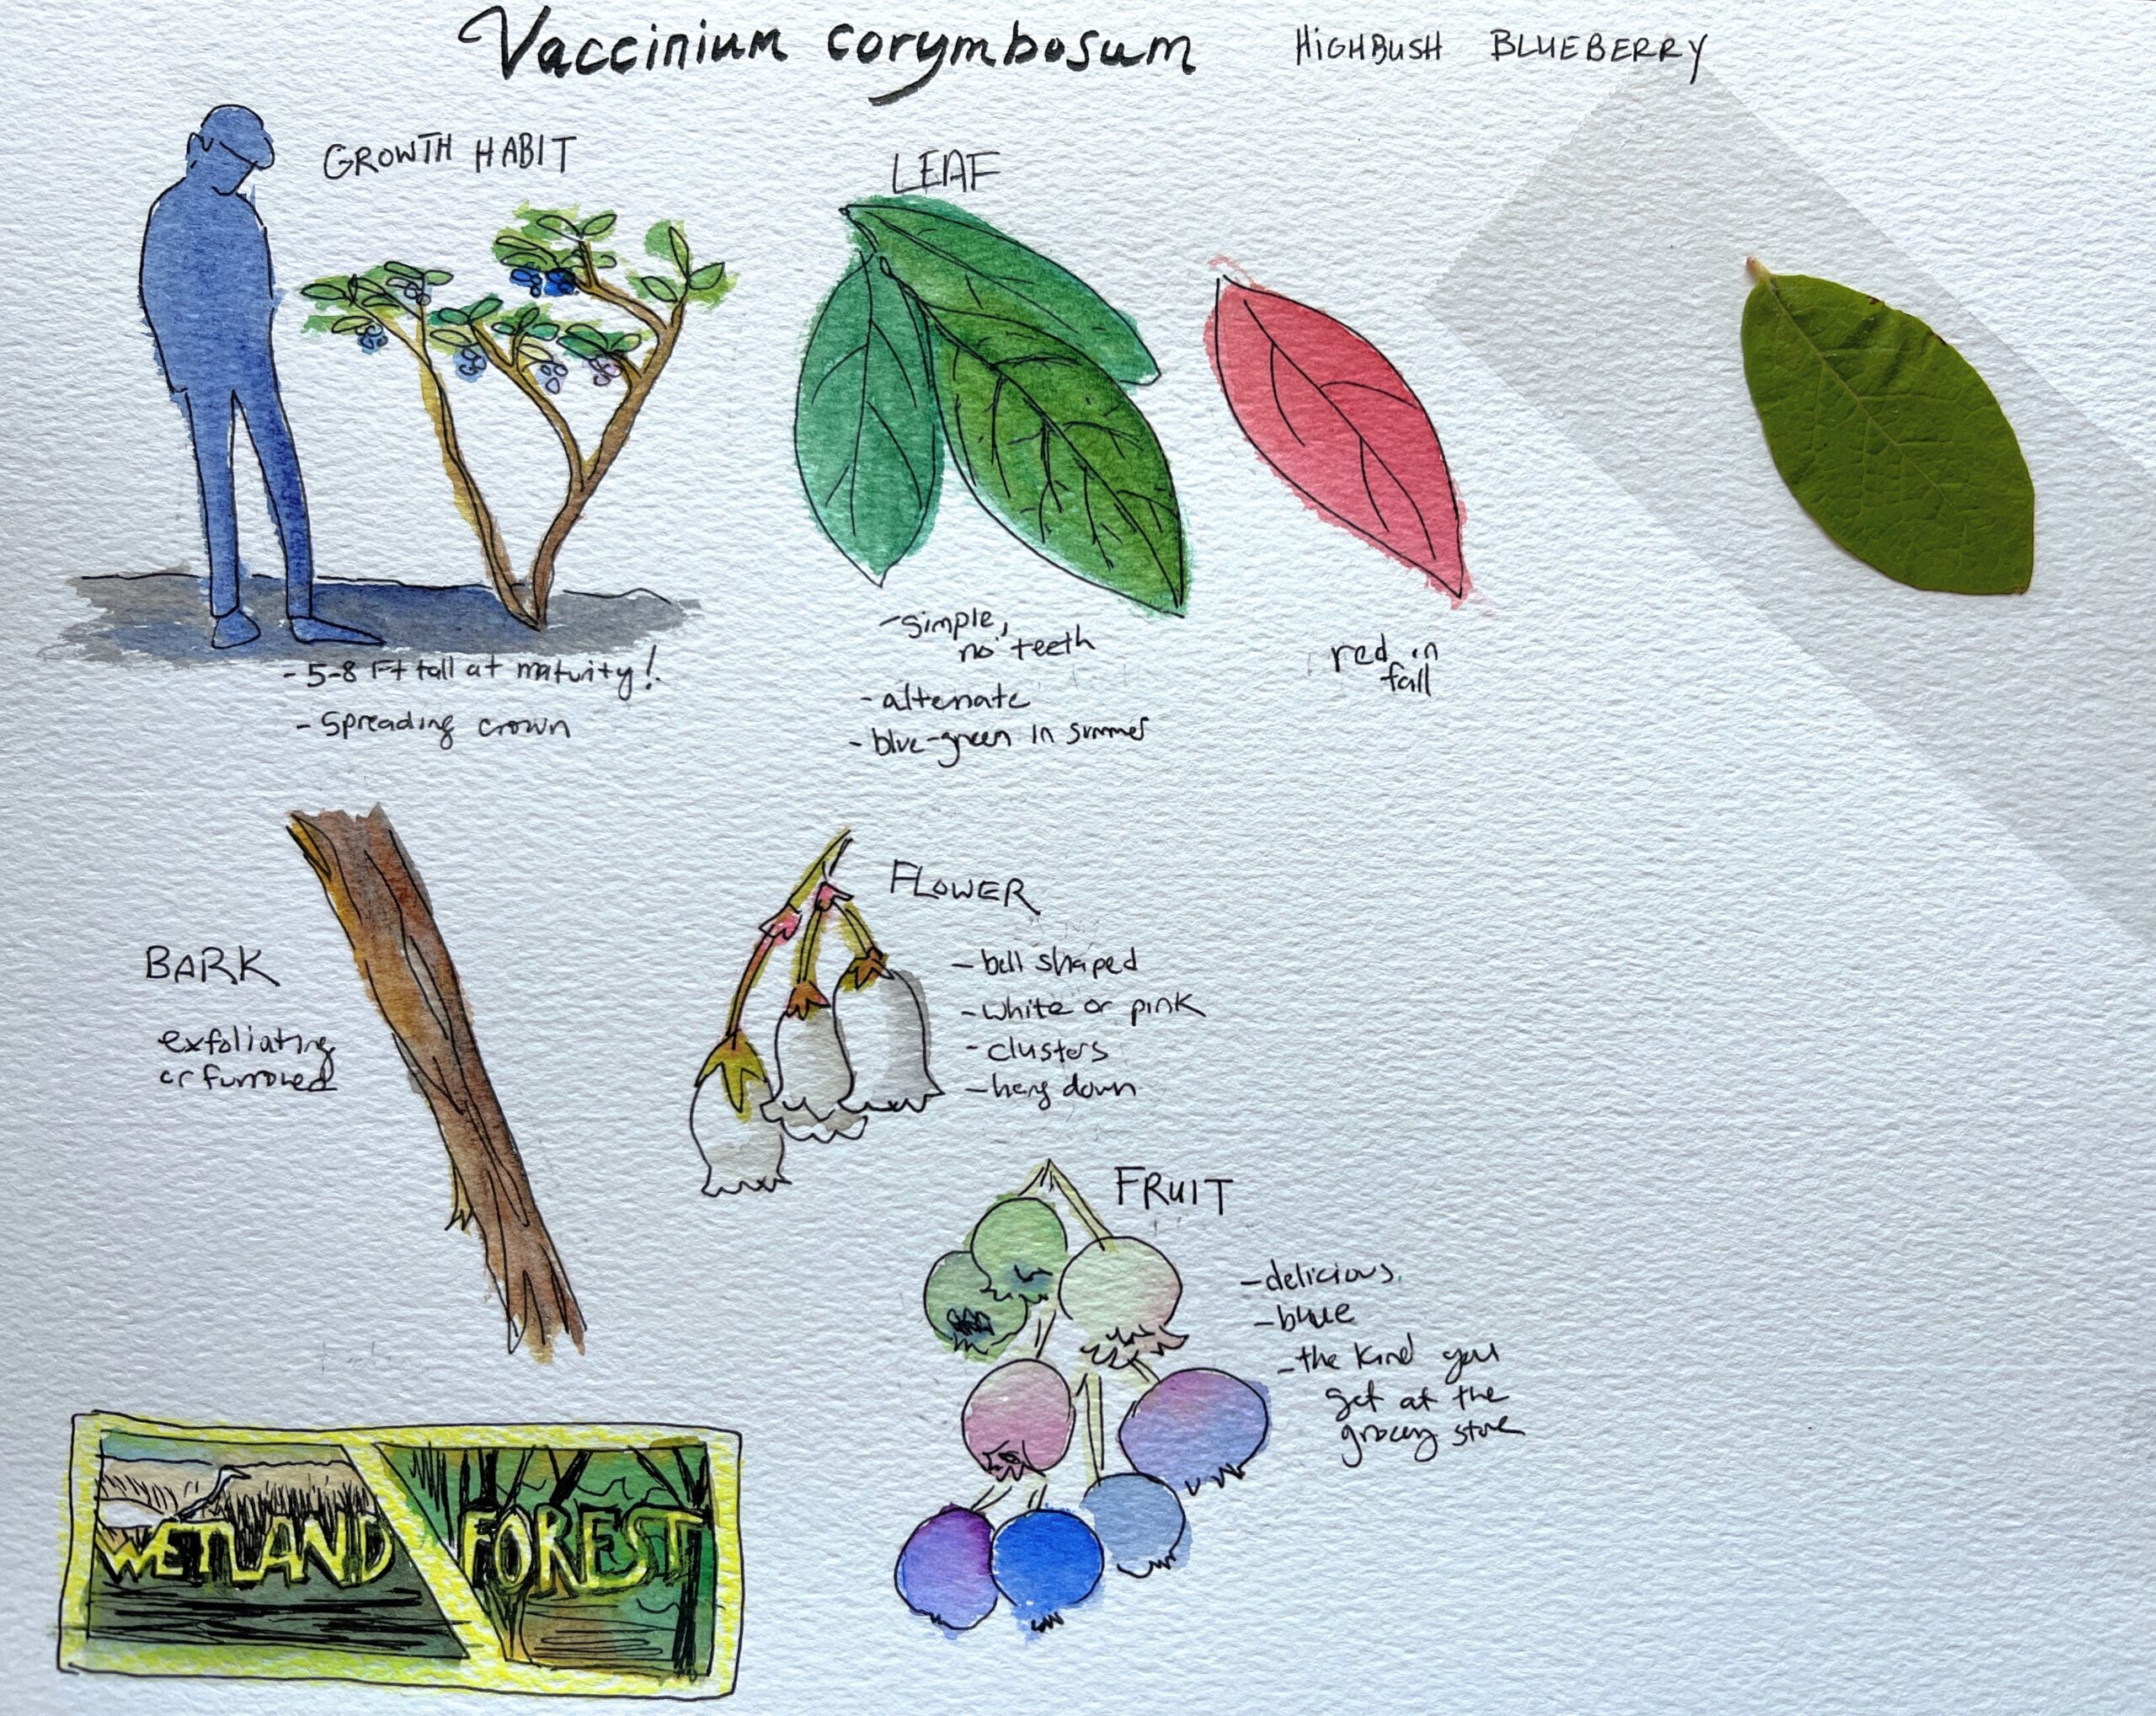 Vaccinium corymbosum, or Highbush Blueberry, guidebook page